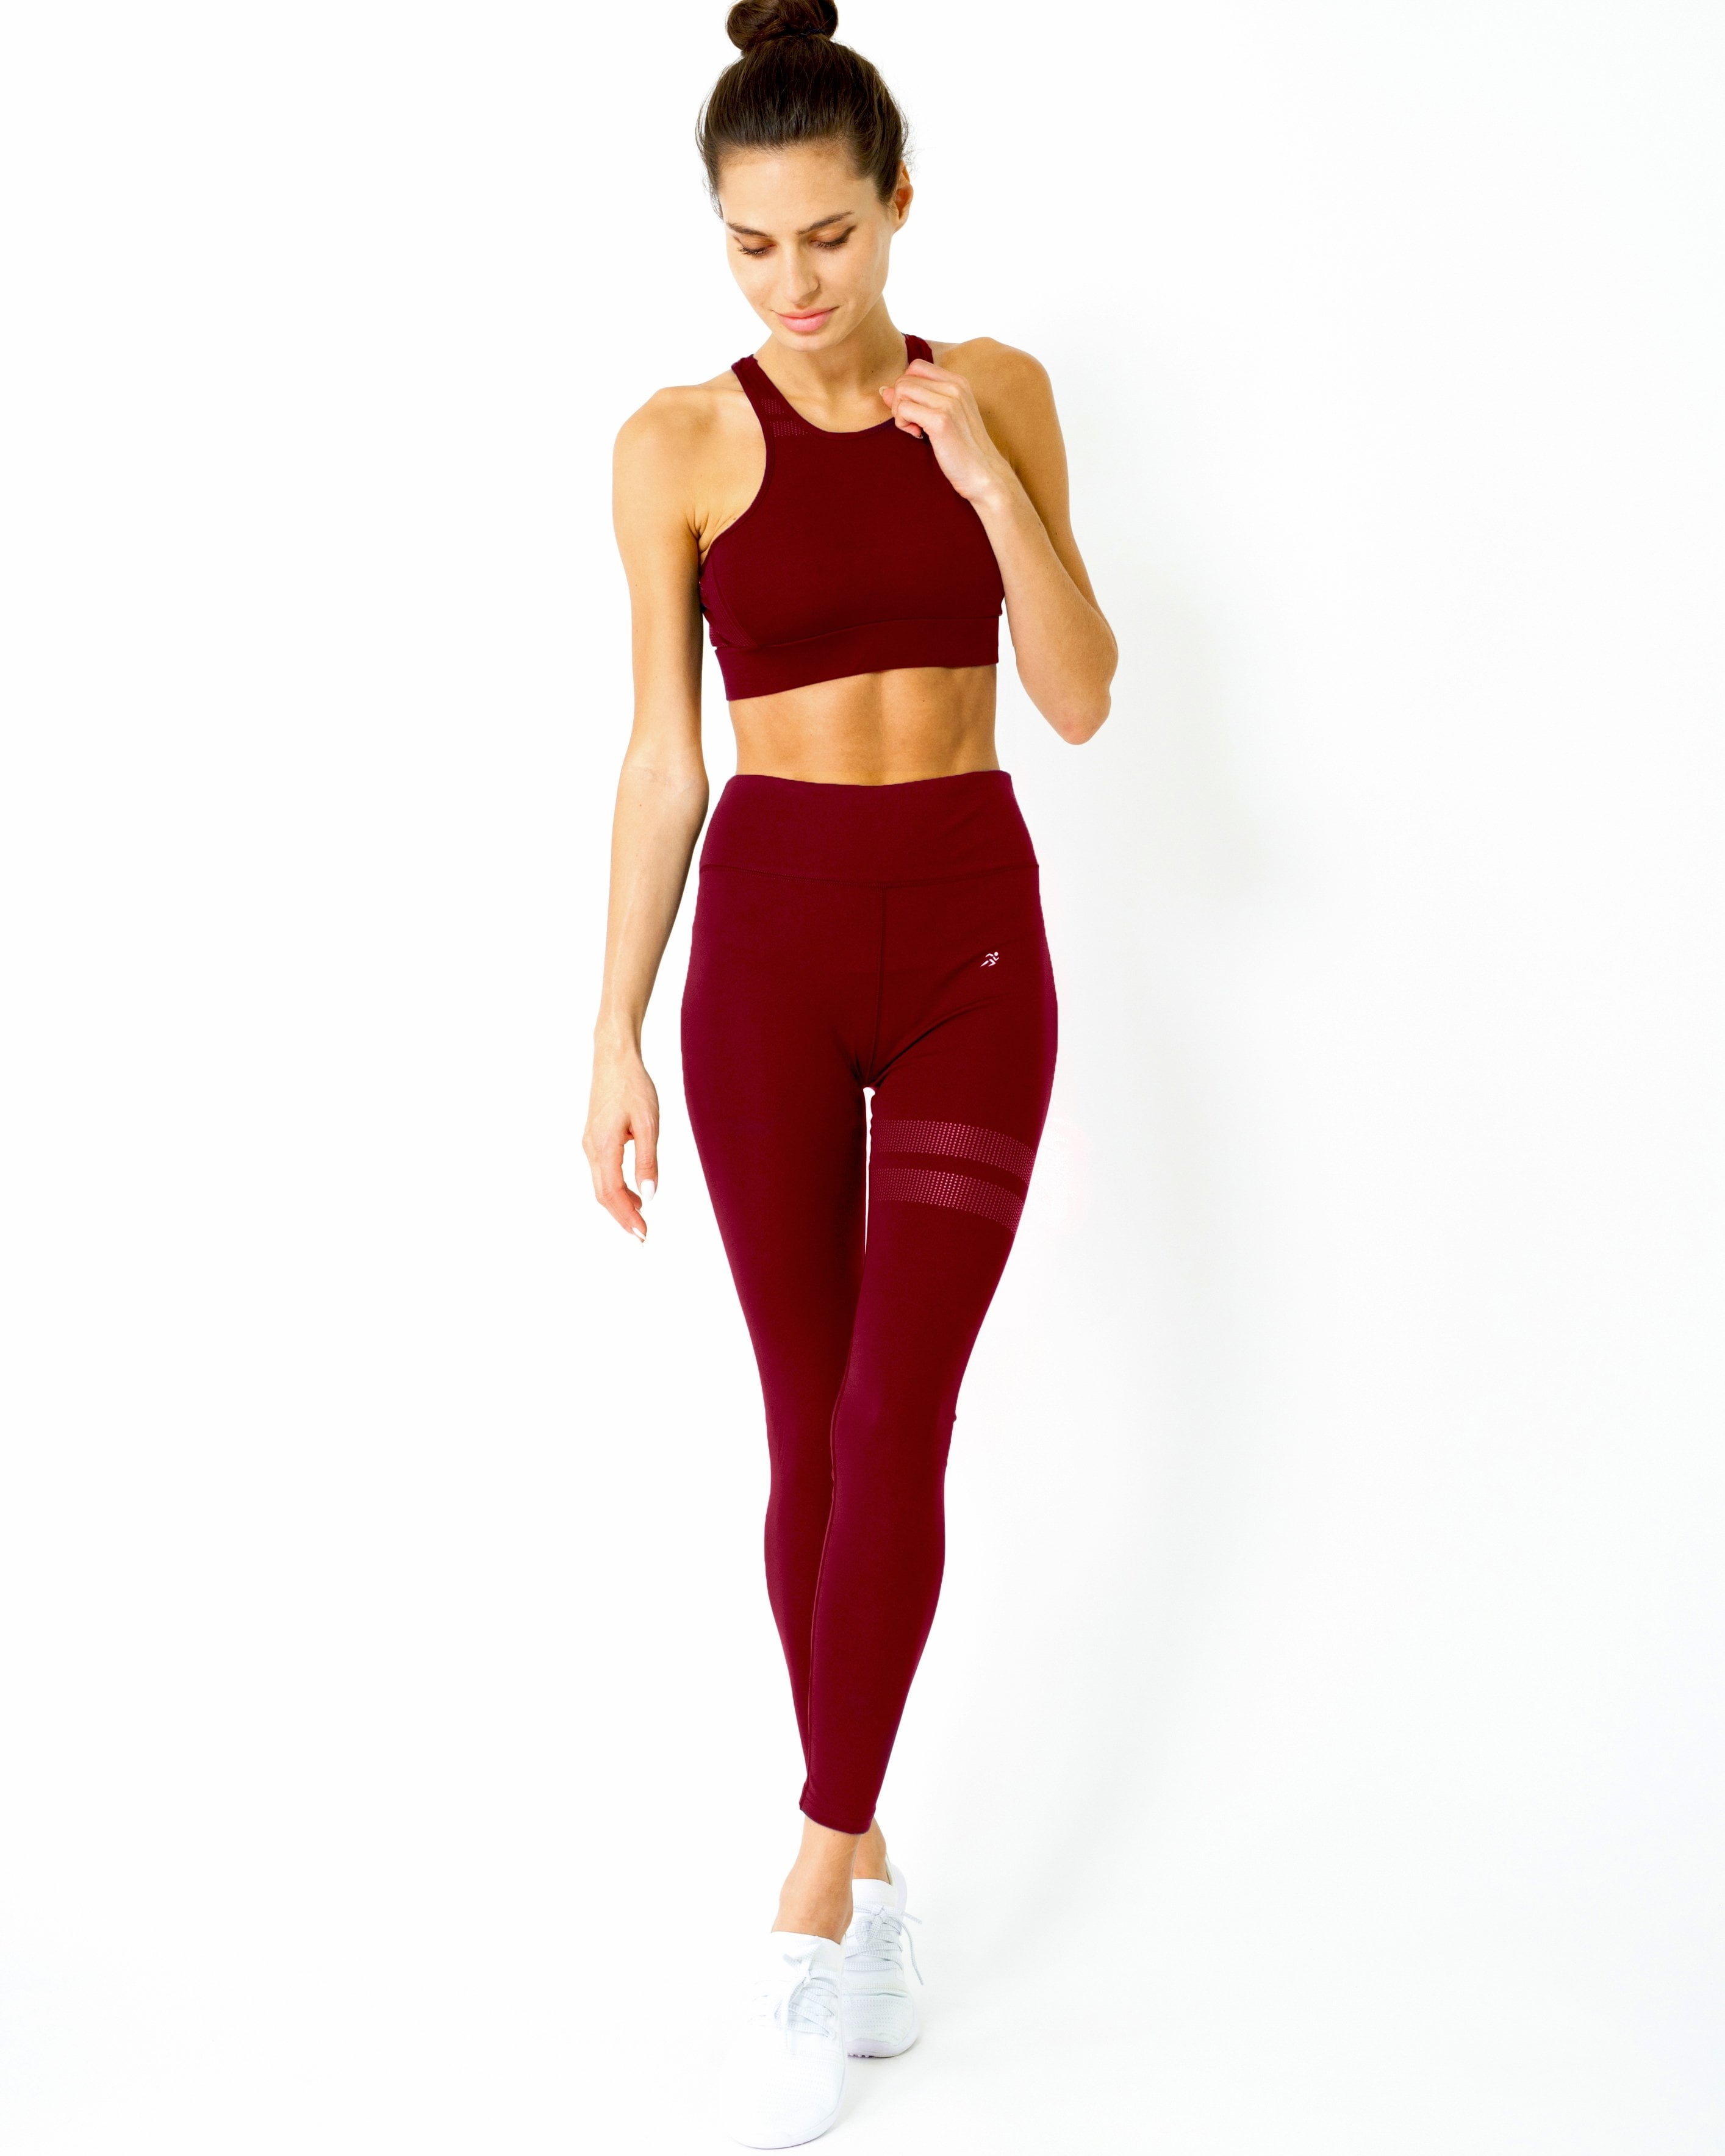 2 Pieces/1 Set Of Women's Yoga Suits, Workout Suits, Sportswear